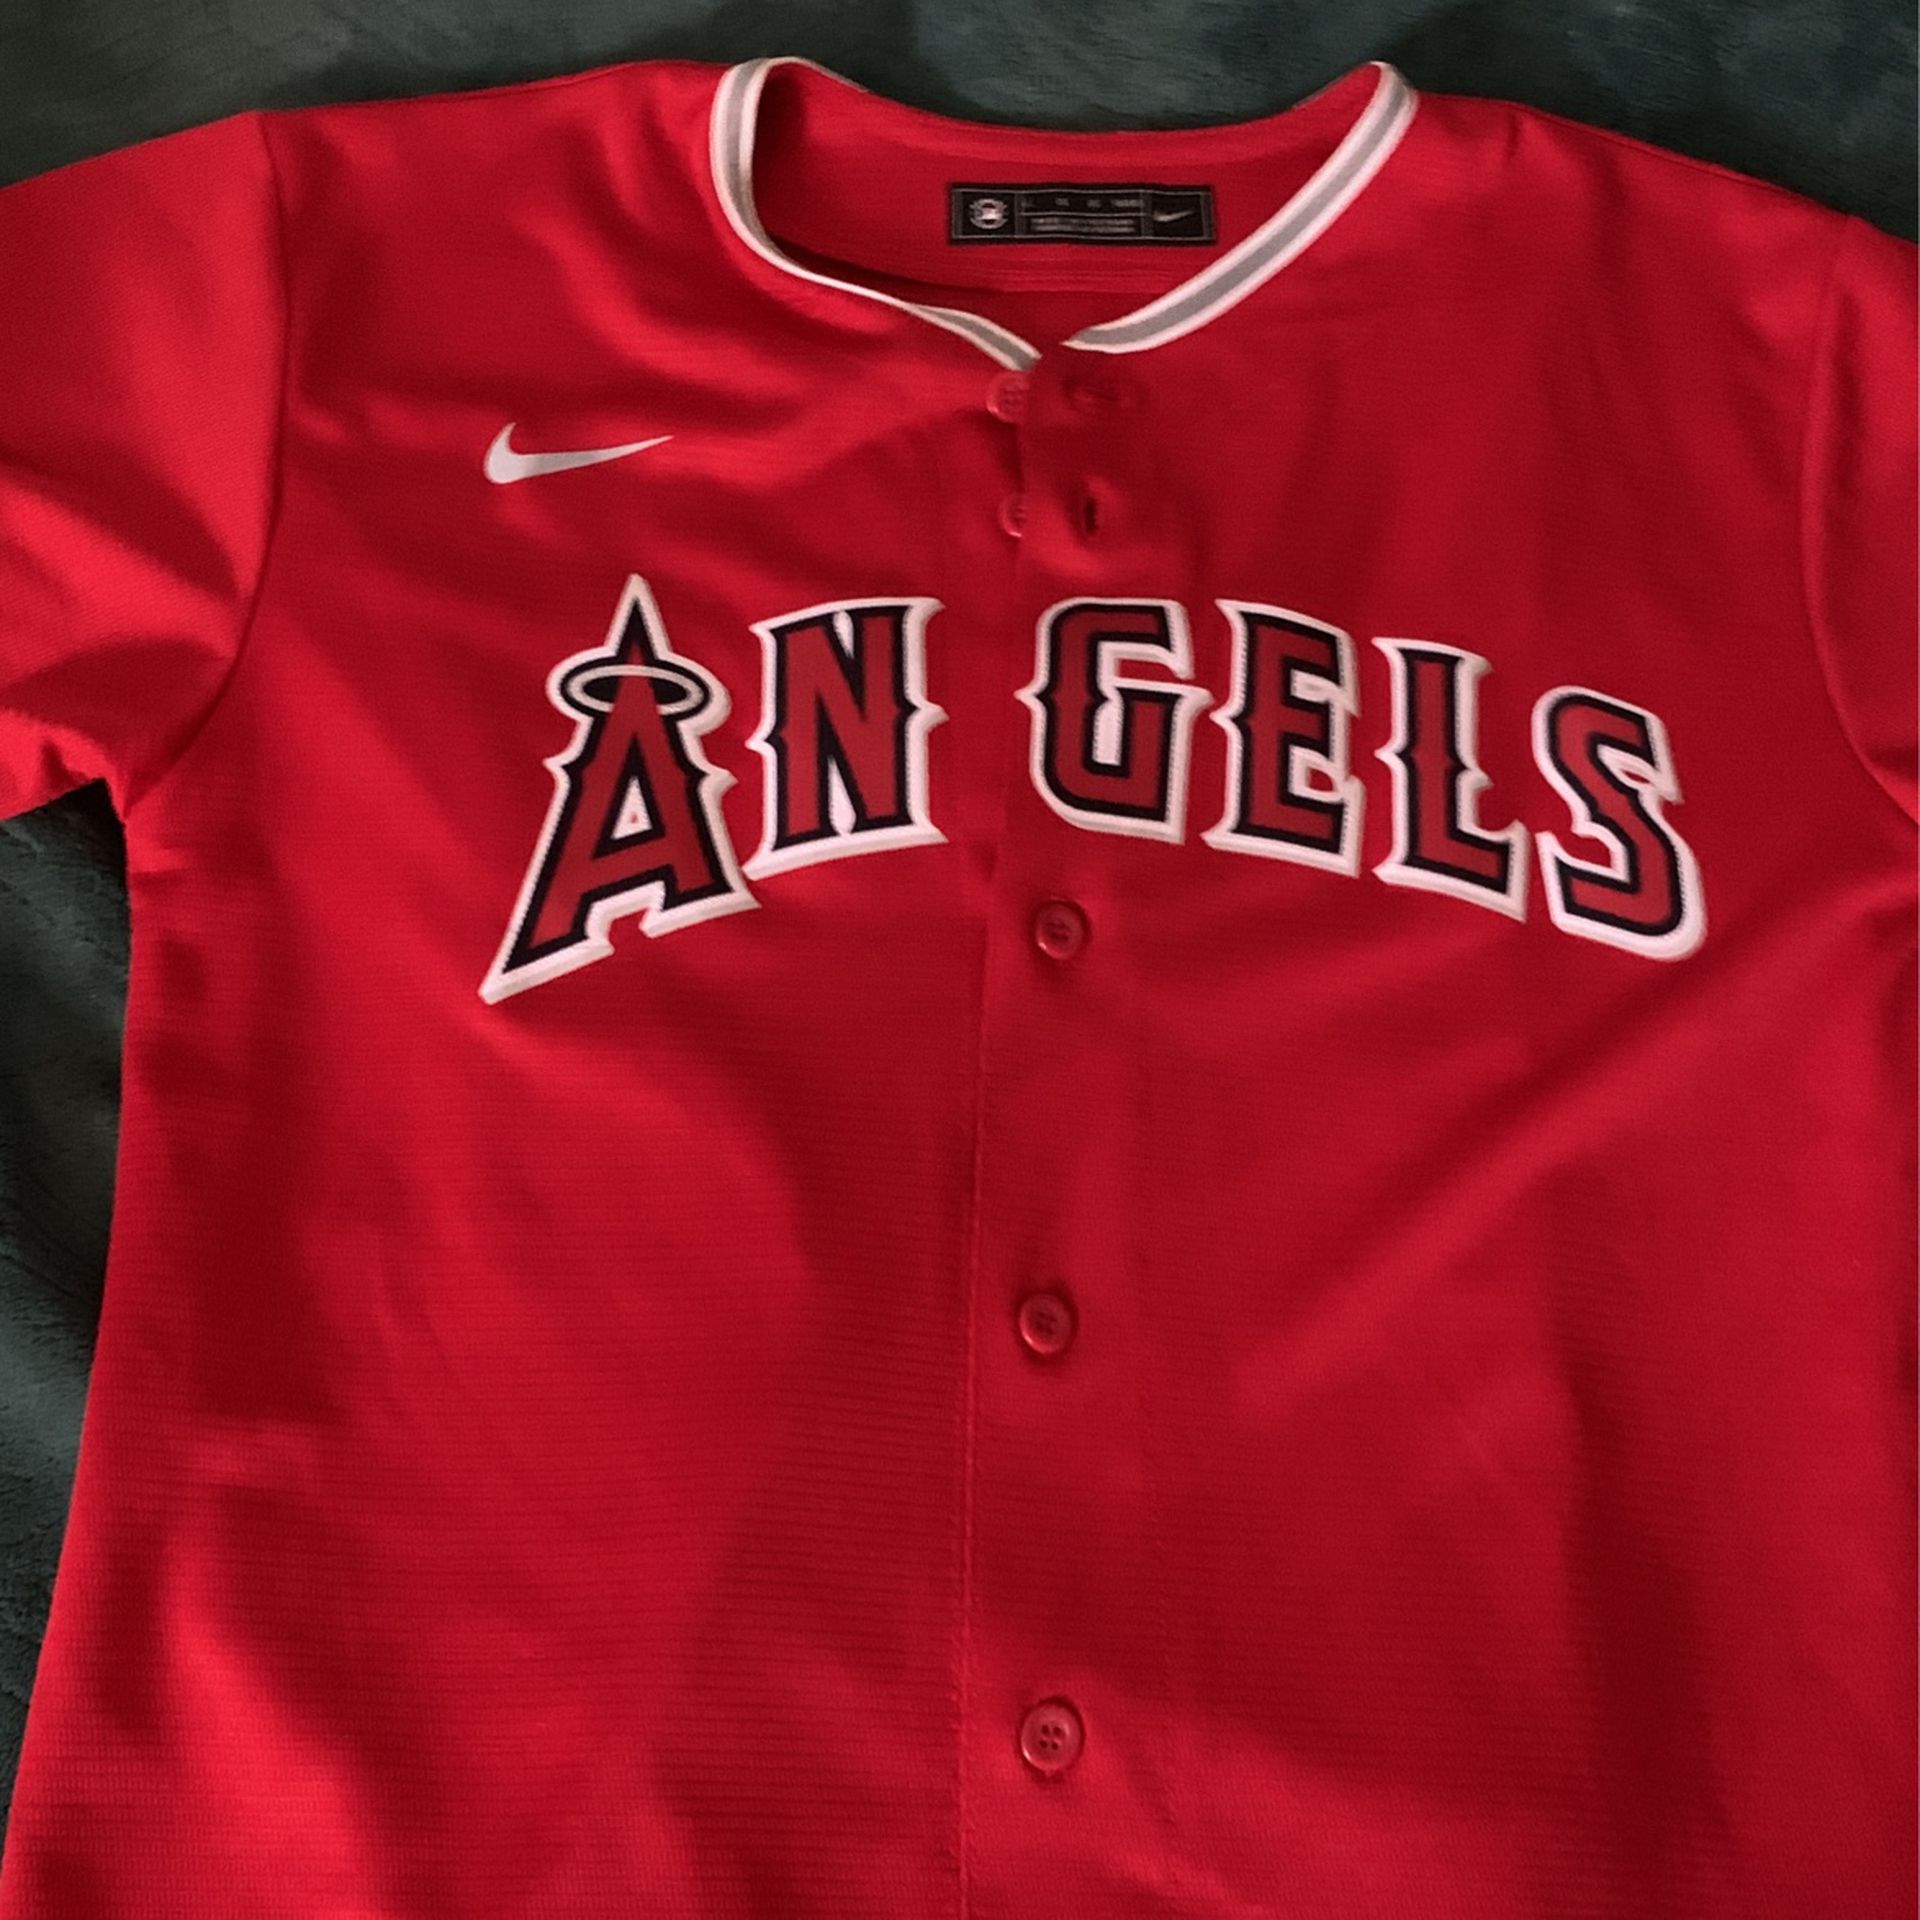 Angels Baseball Jersey 